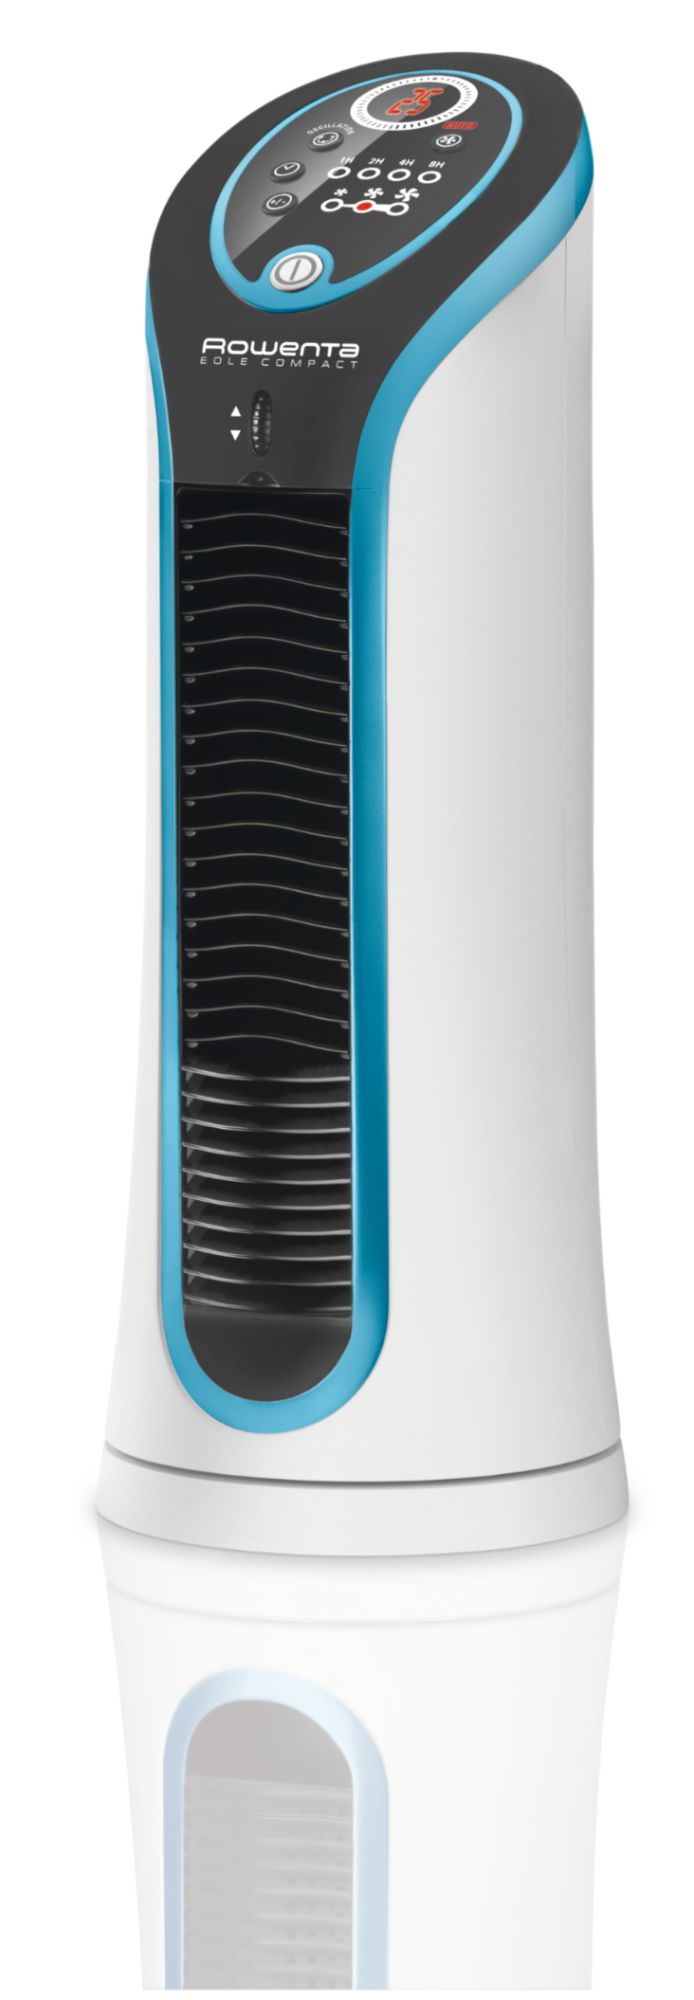 ROWENTA Mini ventilateur colonne, Silencieux, Compact, Timer 8h VU6210F0